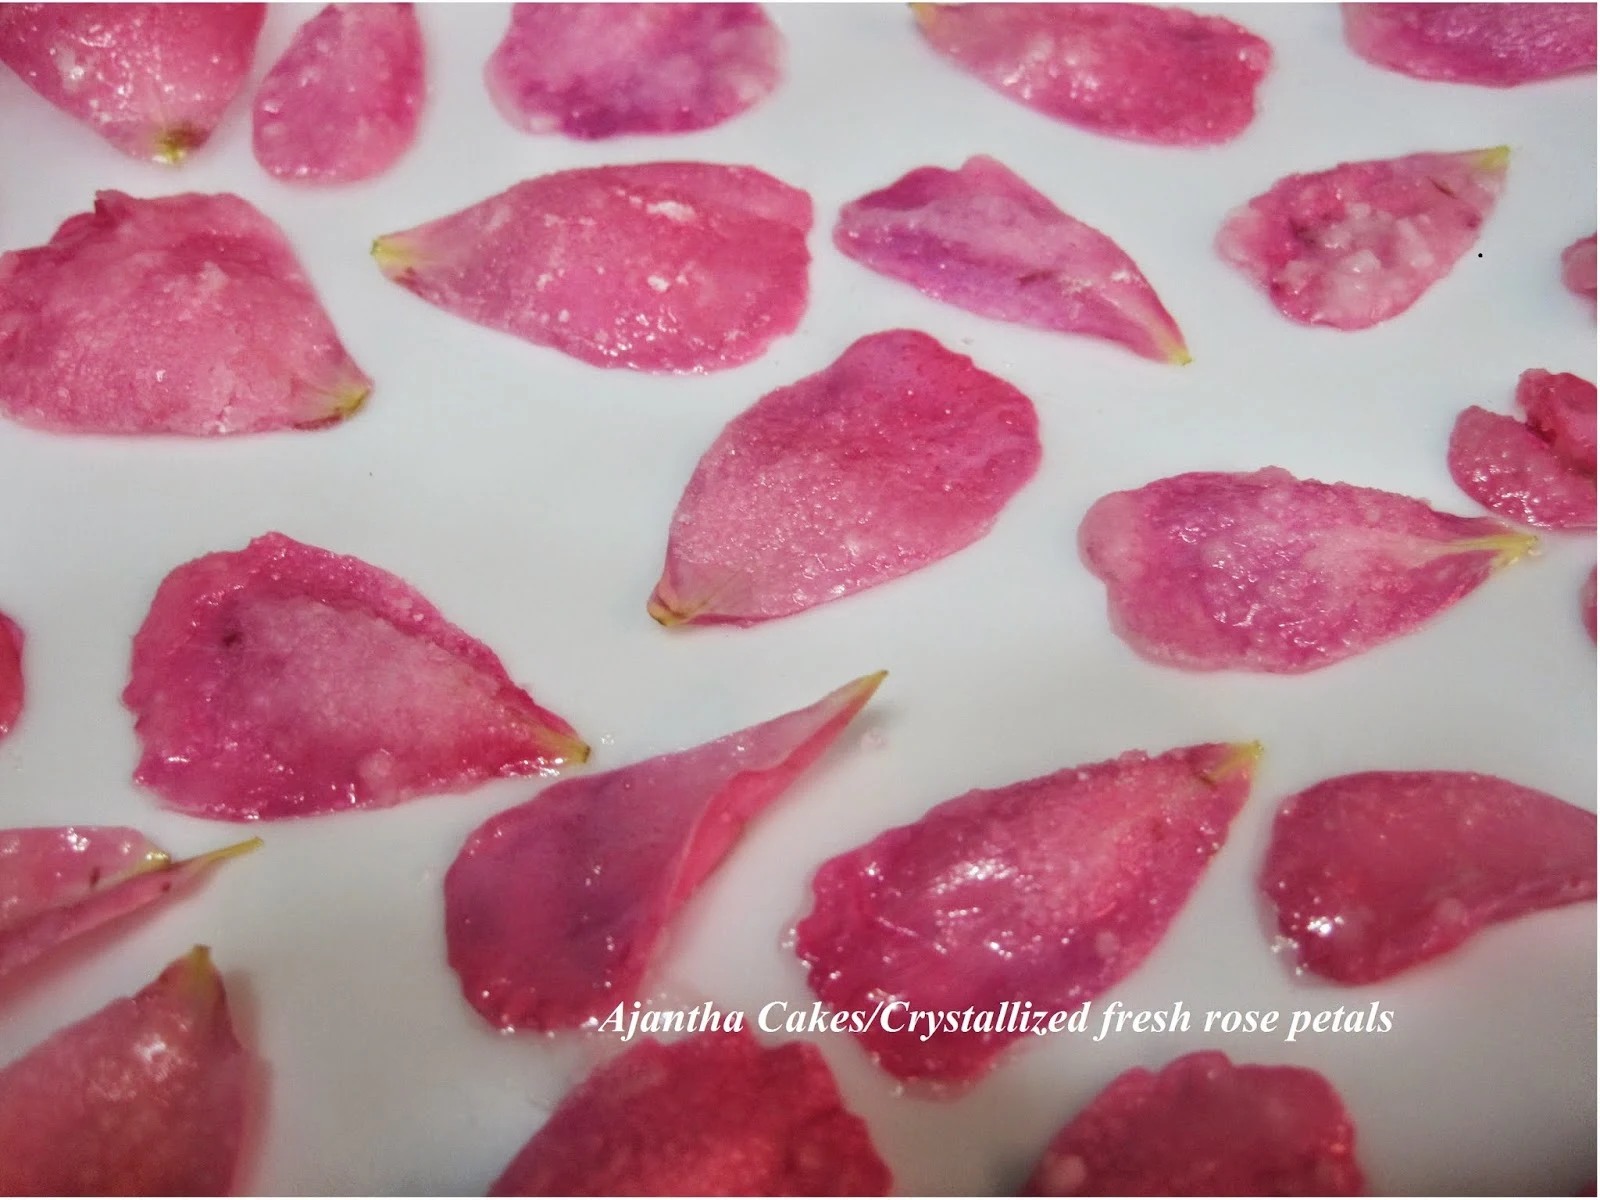 Ajantha Cakes/Crystallized fresh rose petals